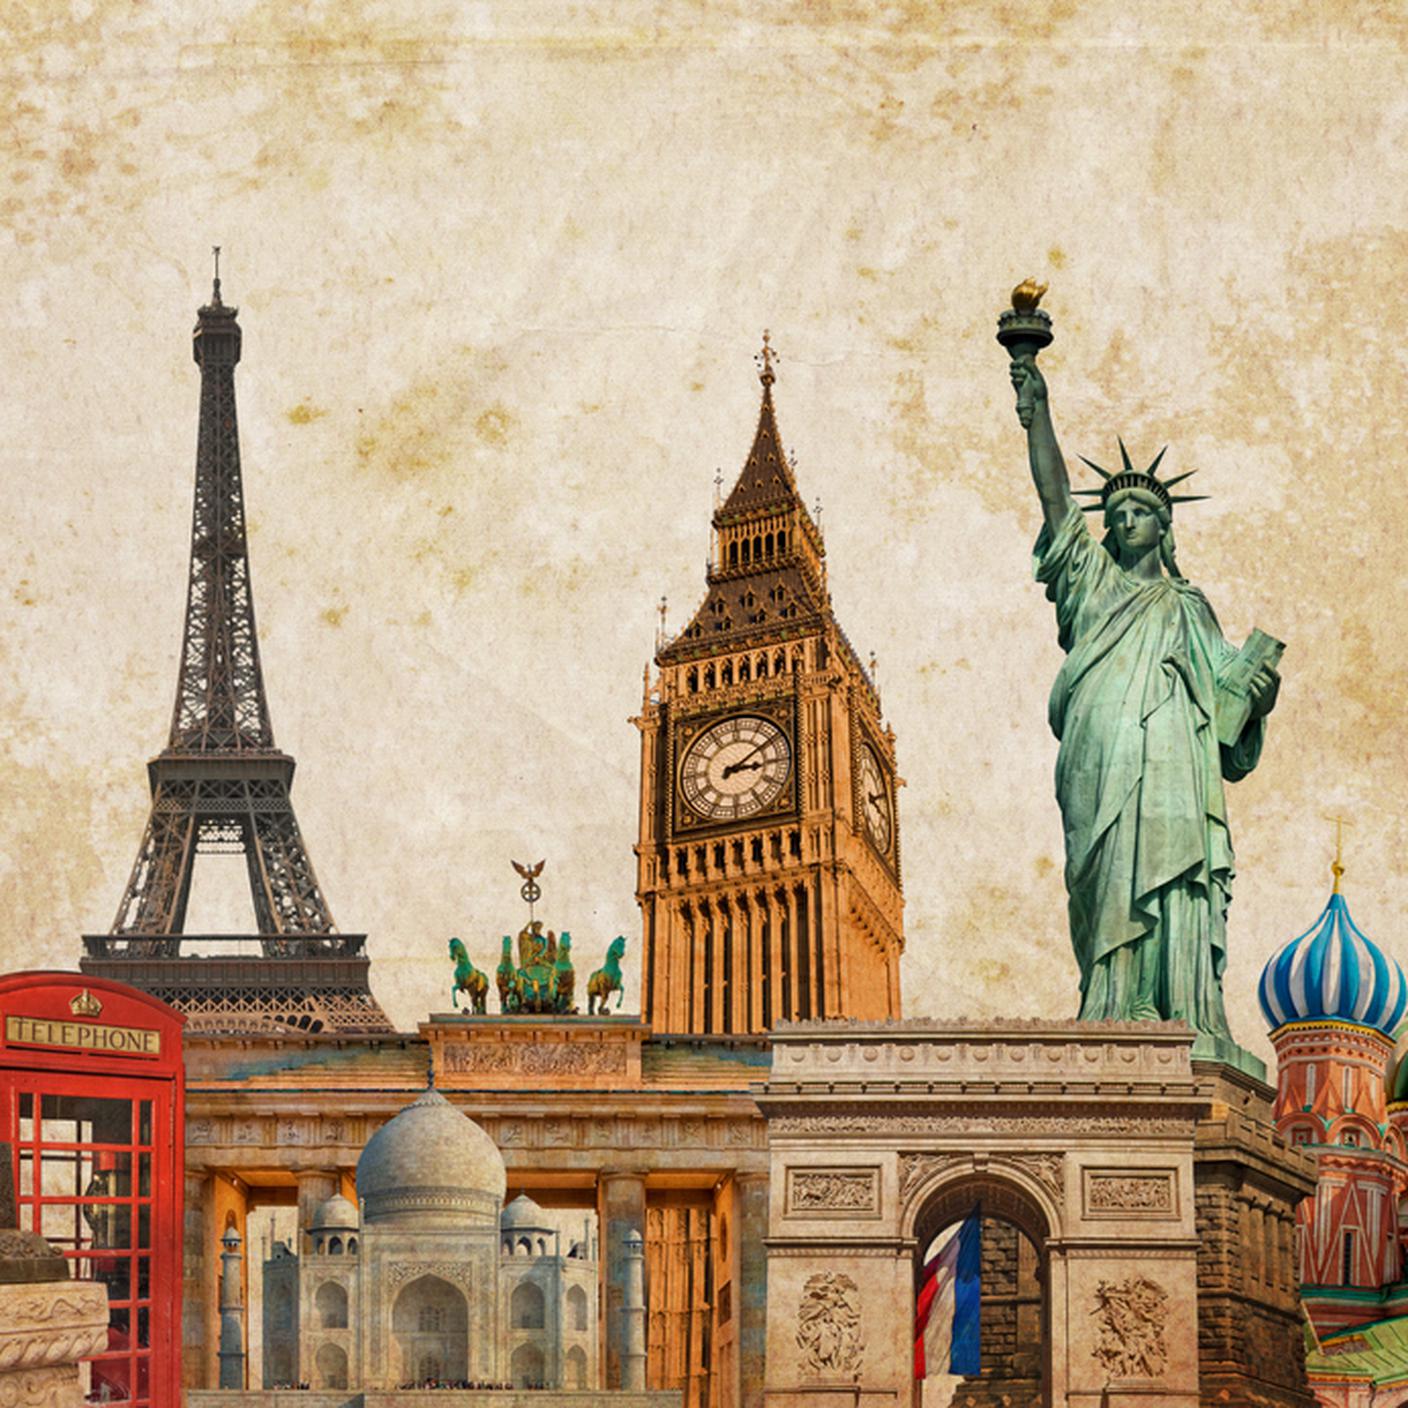 viaggi, monumenti mondiali diverse capitali, Tour Eiffel, Statua libertà, cabina telefonica londinese, agenzia viaggi, Big Ben